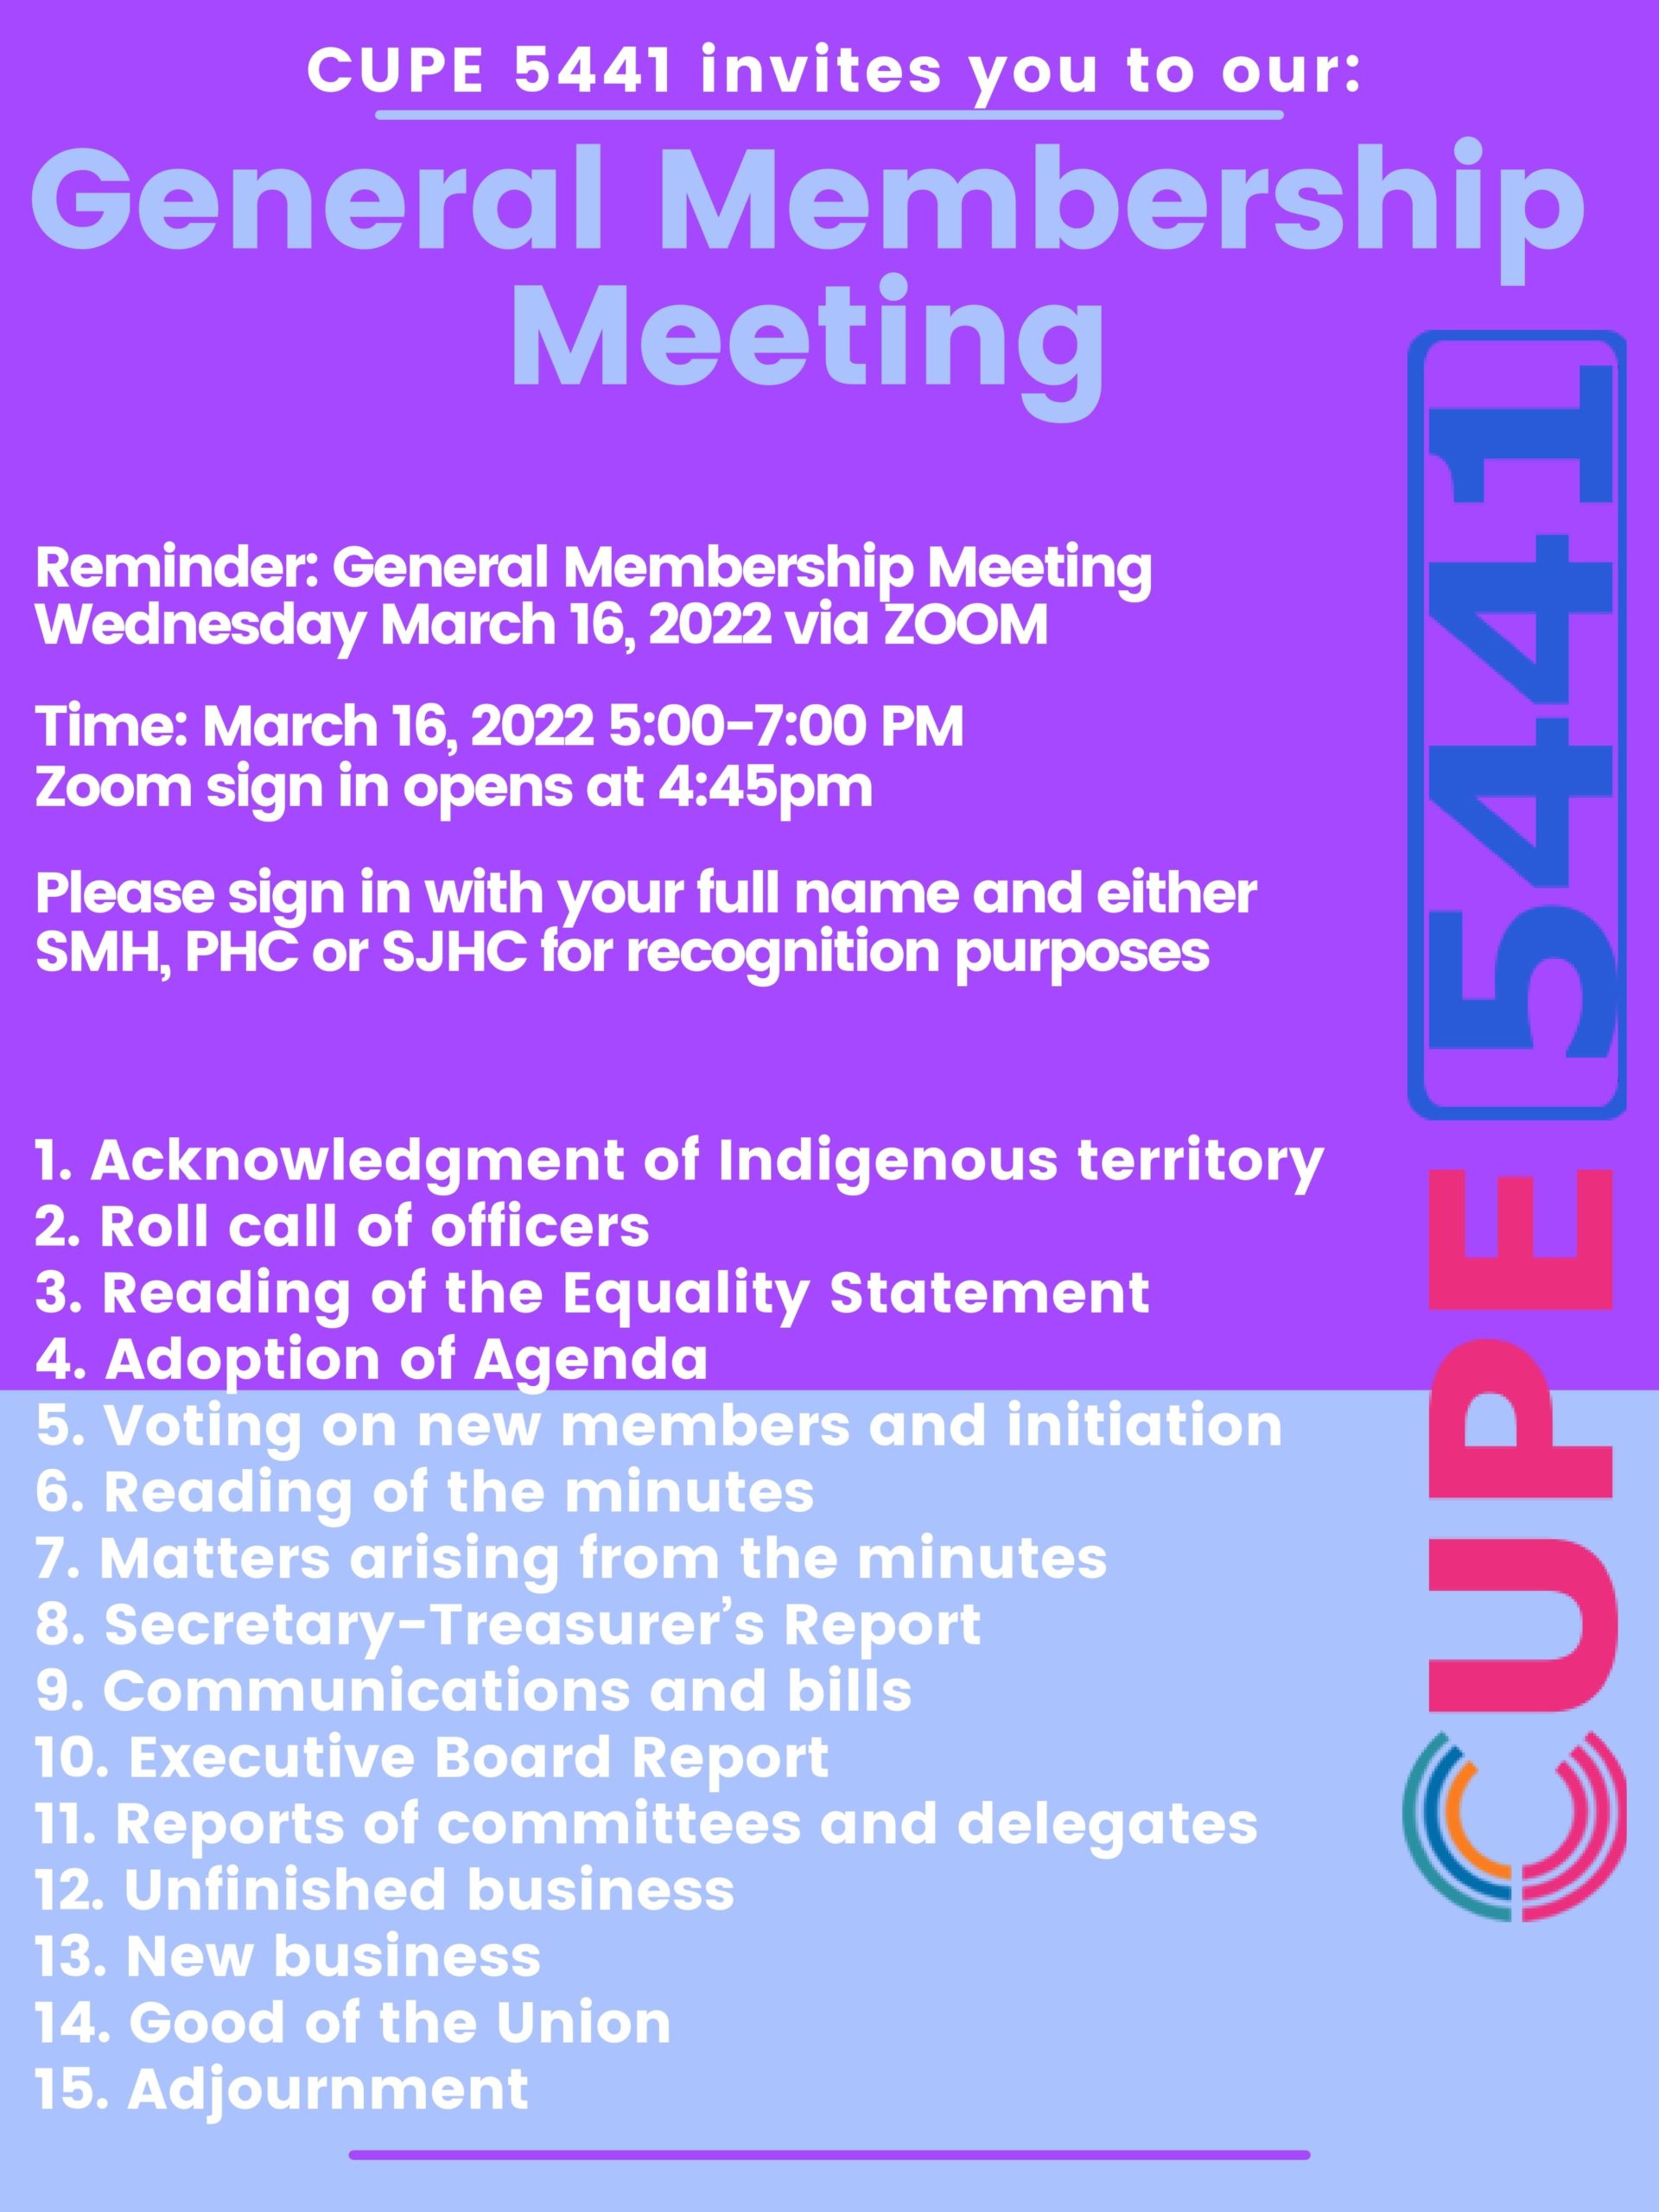 General Membership Meeting March 16, 2022 CUPE 5441